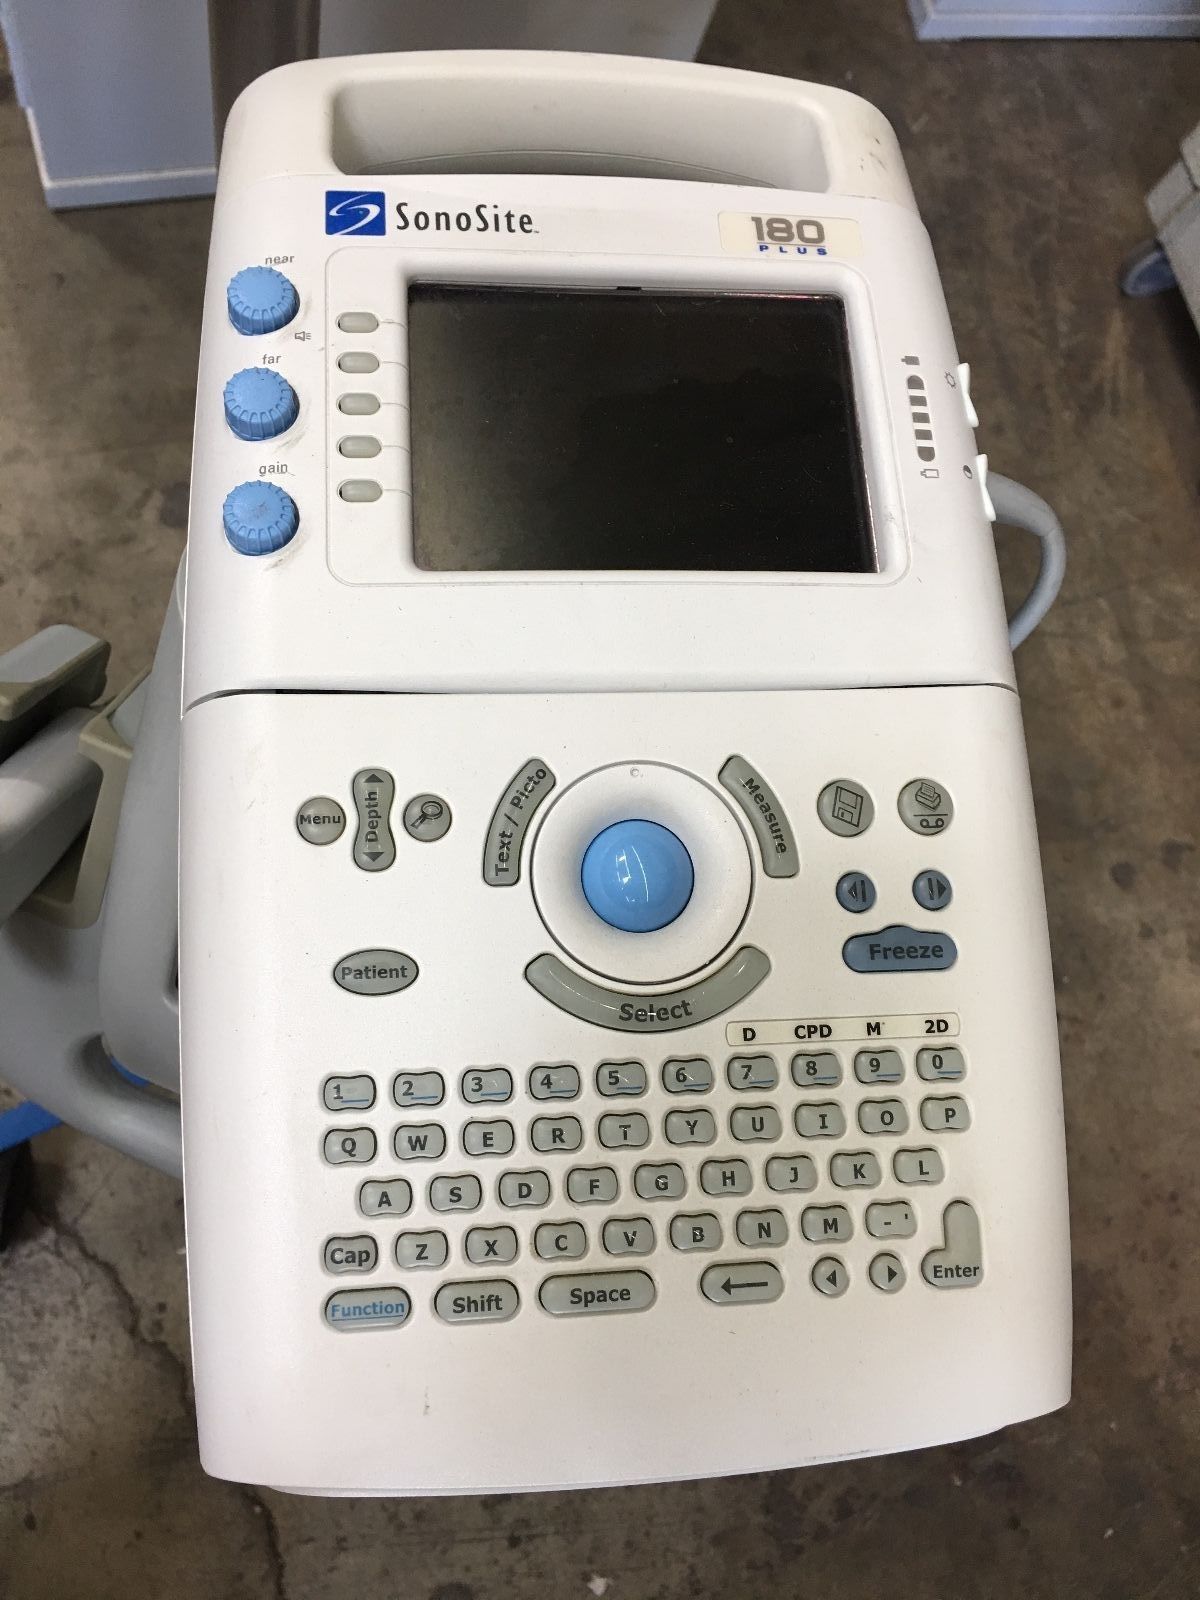 SonoSite 180 Plus Ultrasound System DIAGNOSTIC ULTRASOUND MACHINES FOR SALE